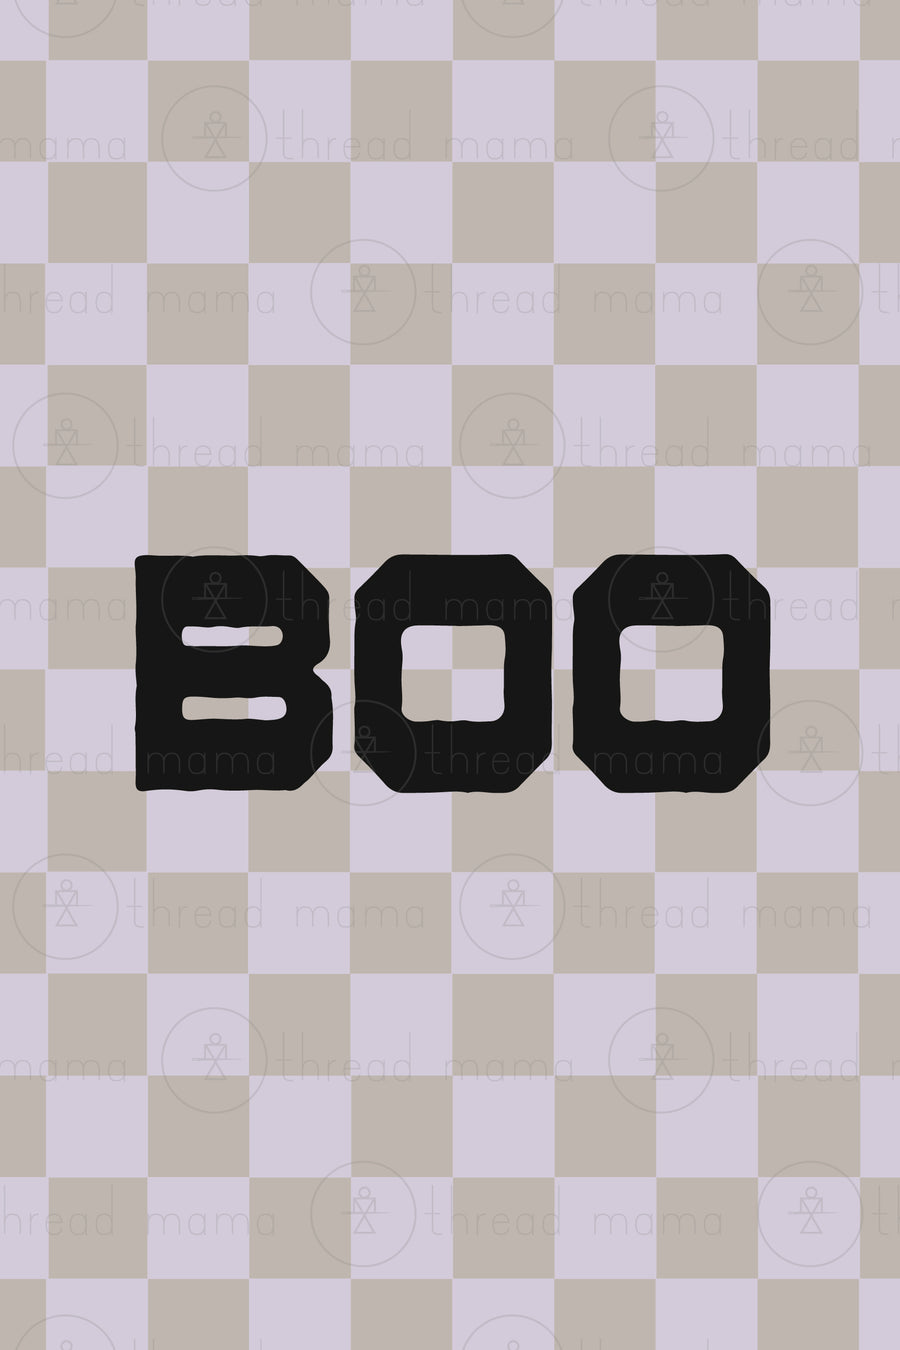 Boo - Set